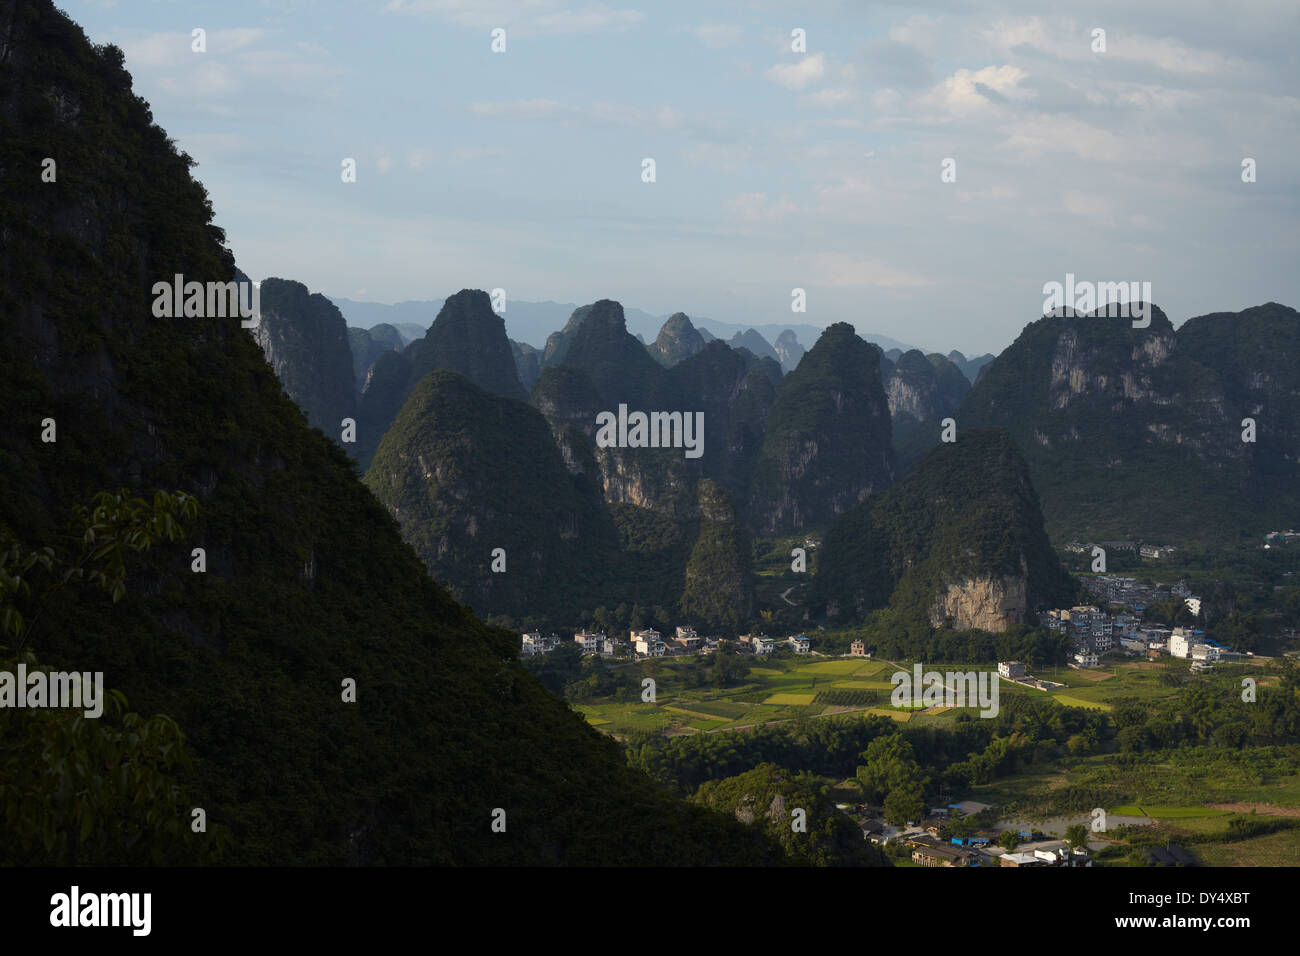 Limestone peaks, Yangshuo, China Stock Photo